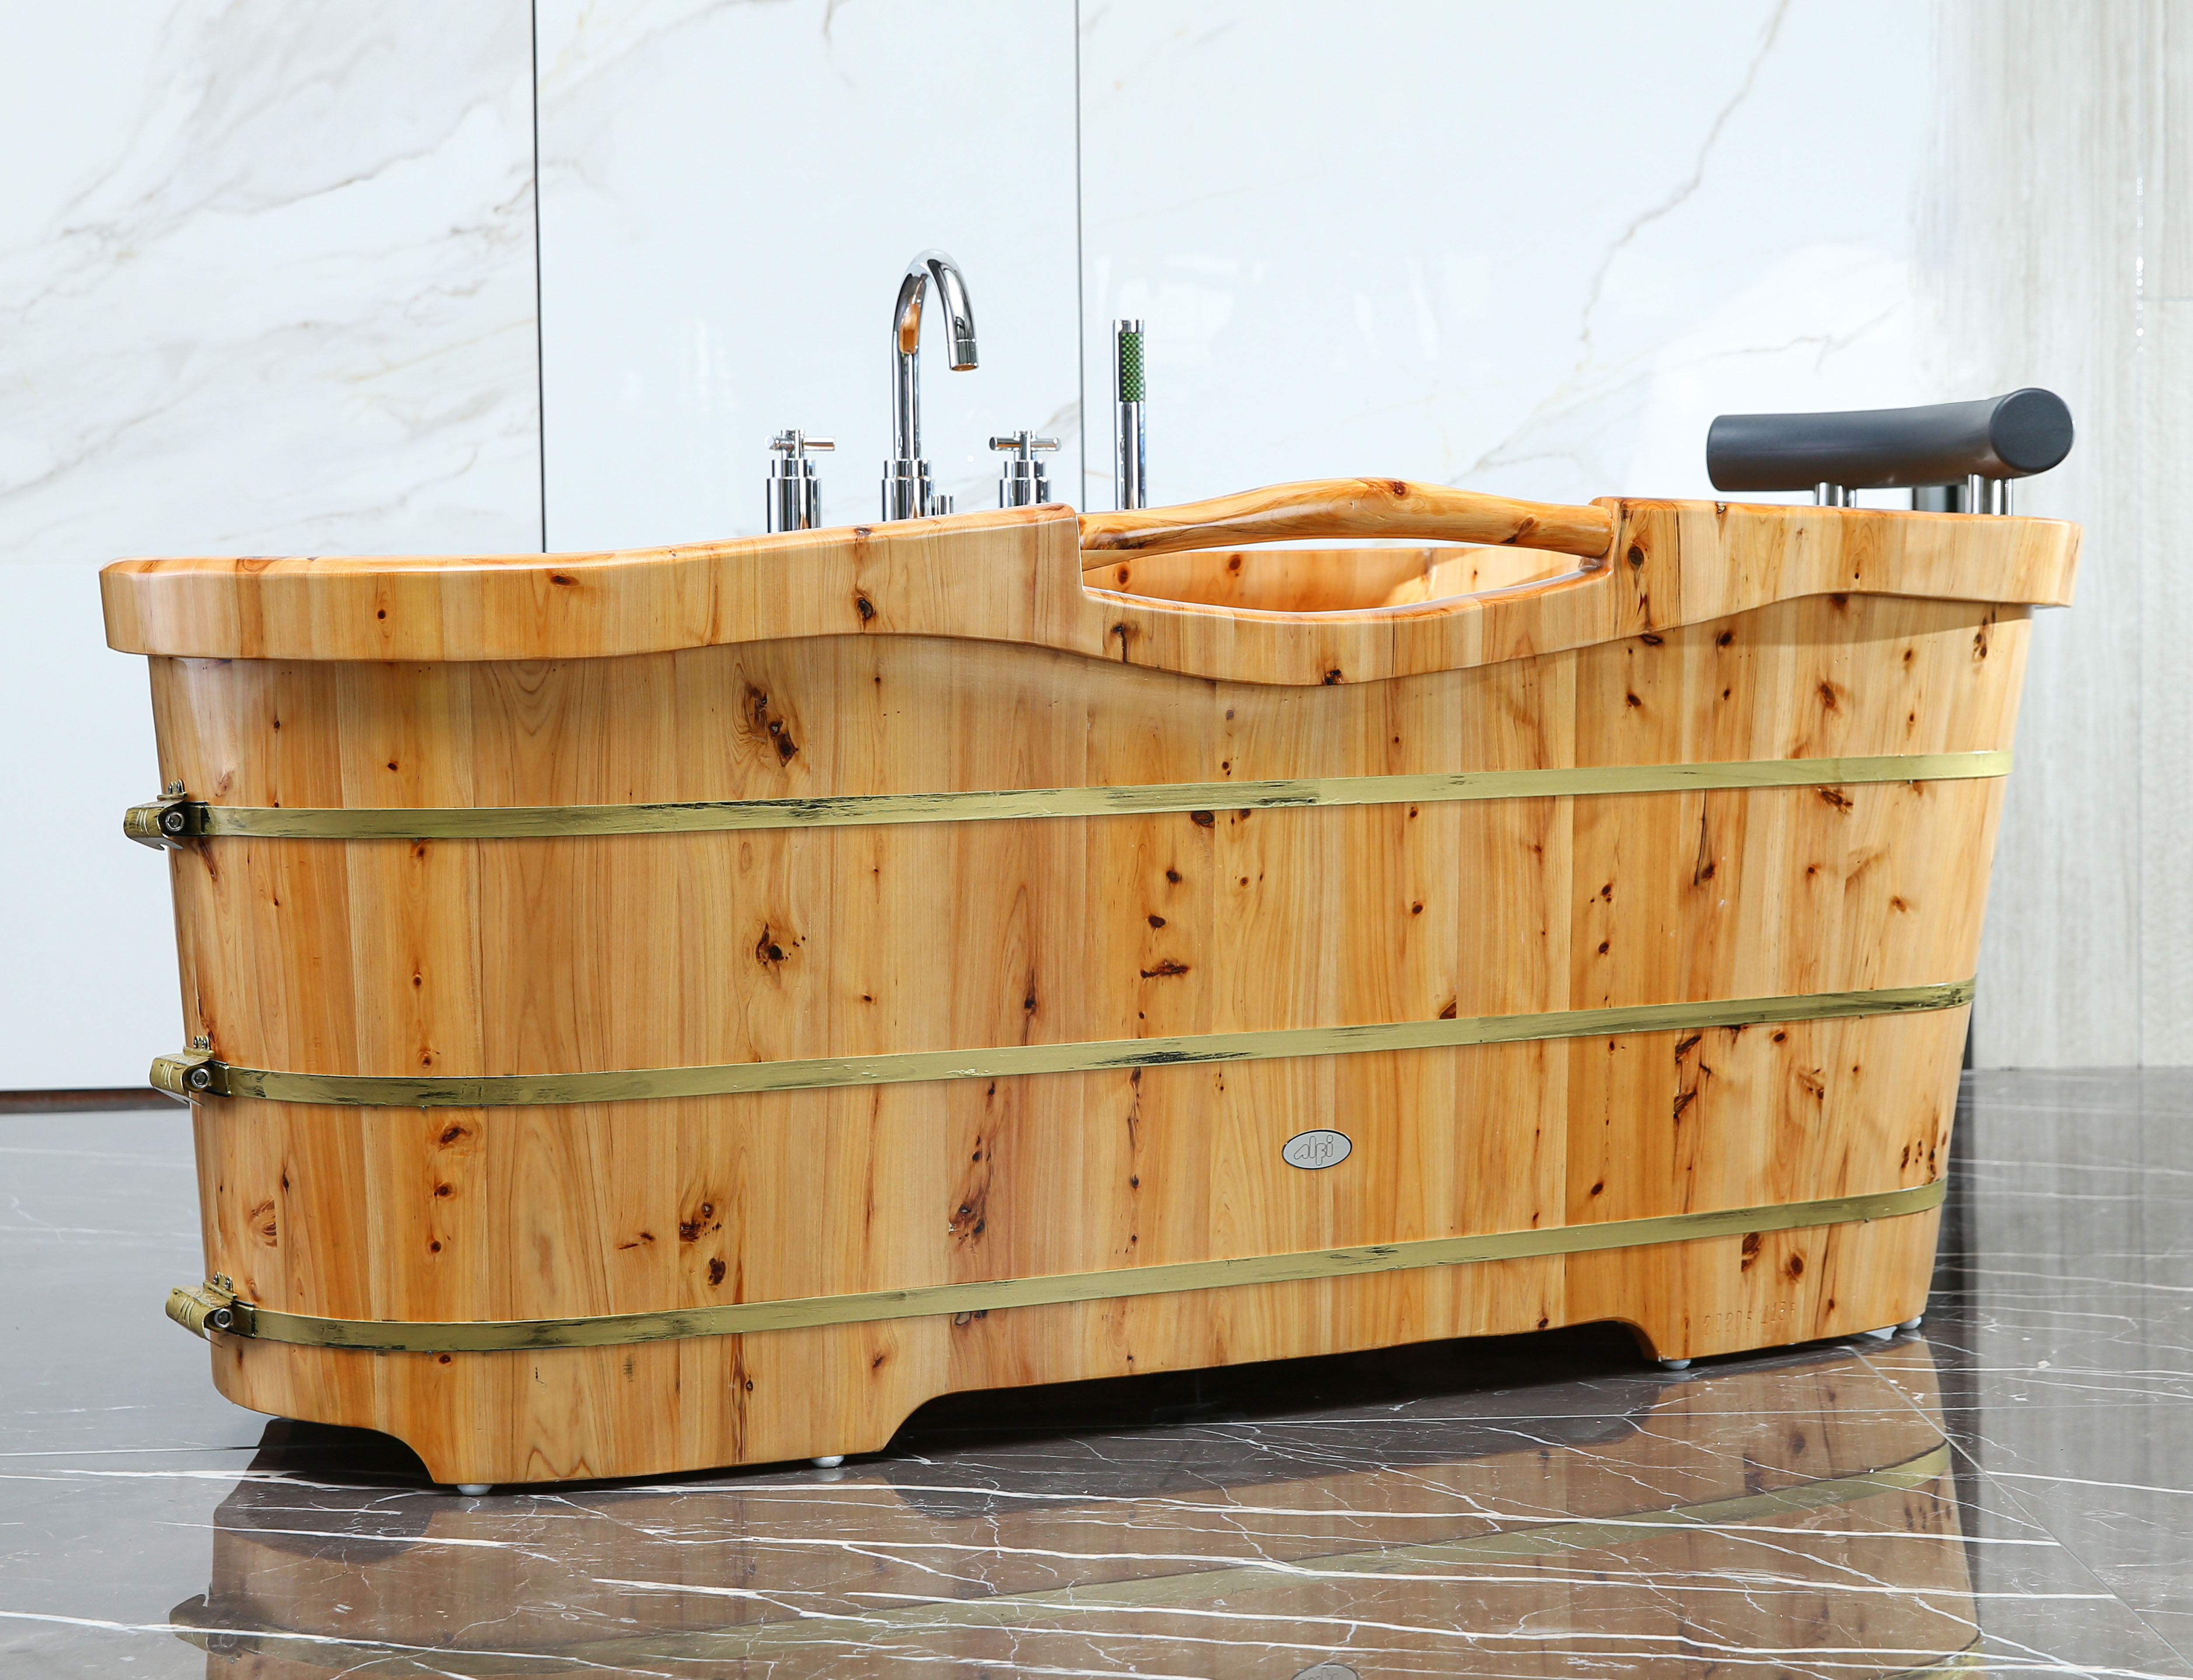 61&apos;&apos; Free Standing Cedar Wood Bath Tub With Chrome Tub Filler - Natural Wood